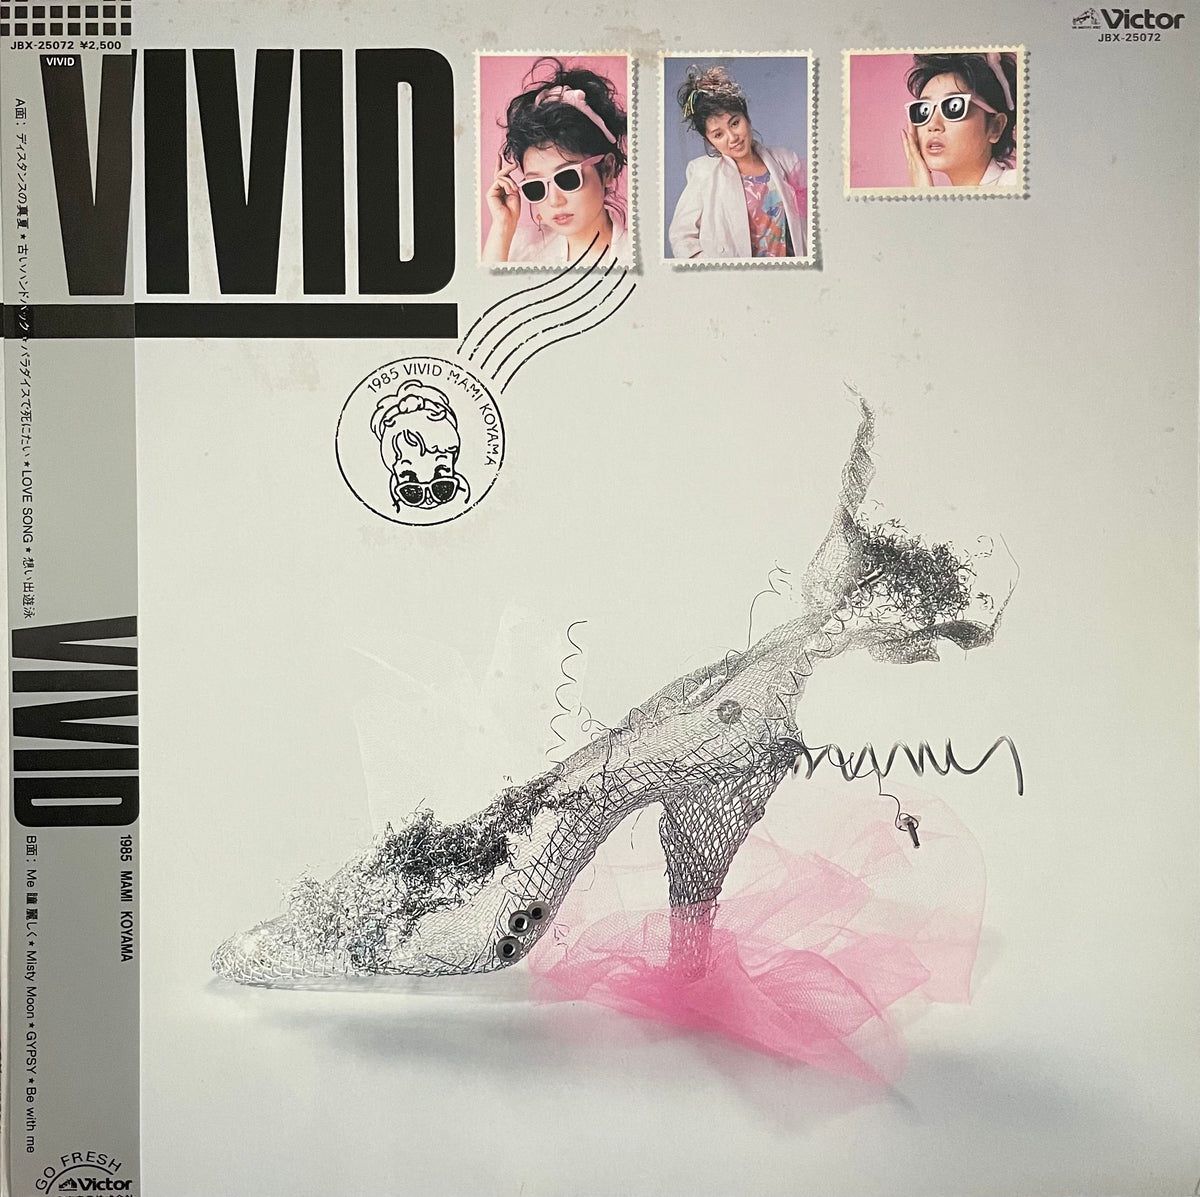 Mami Koyama = 小山茉美 ‎– Vivid – Galapagos Records